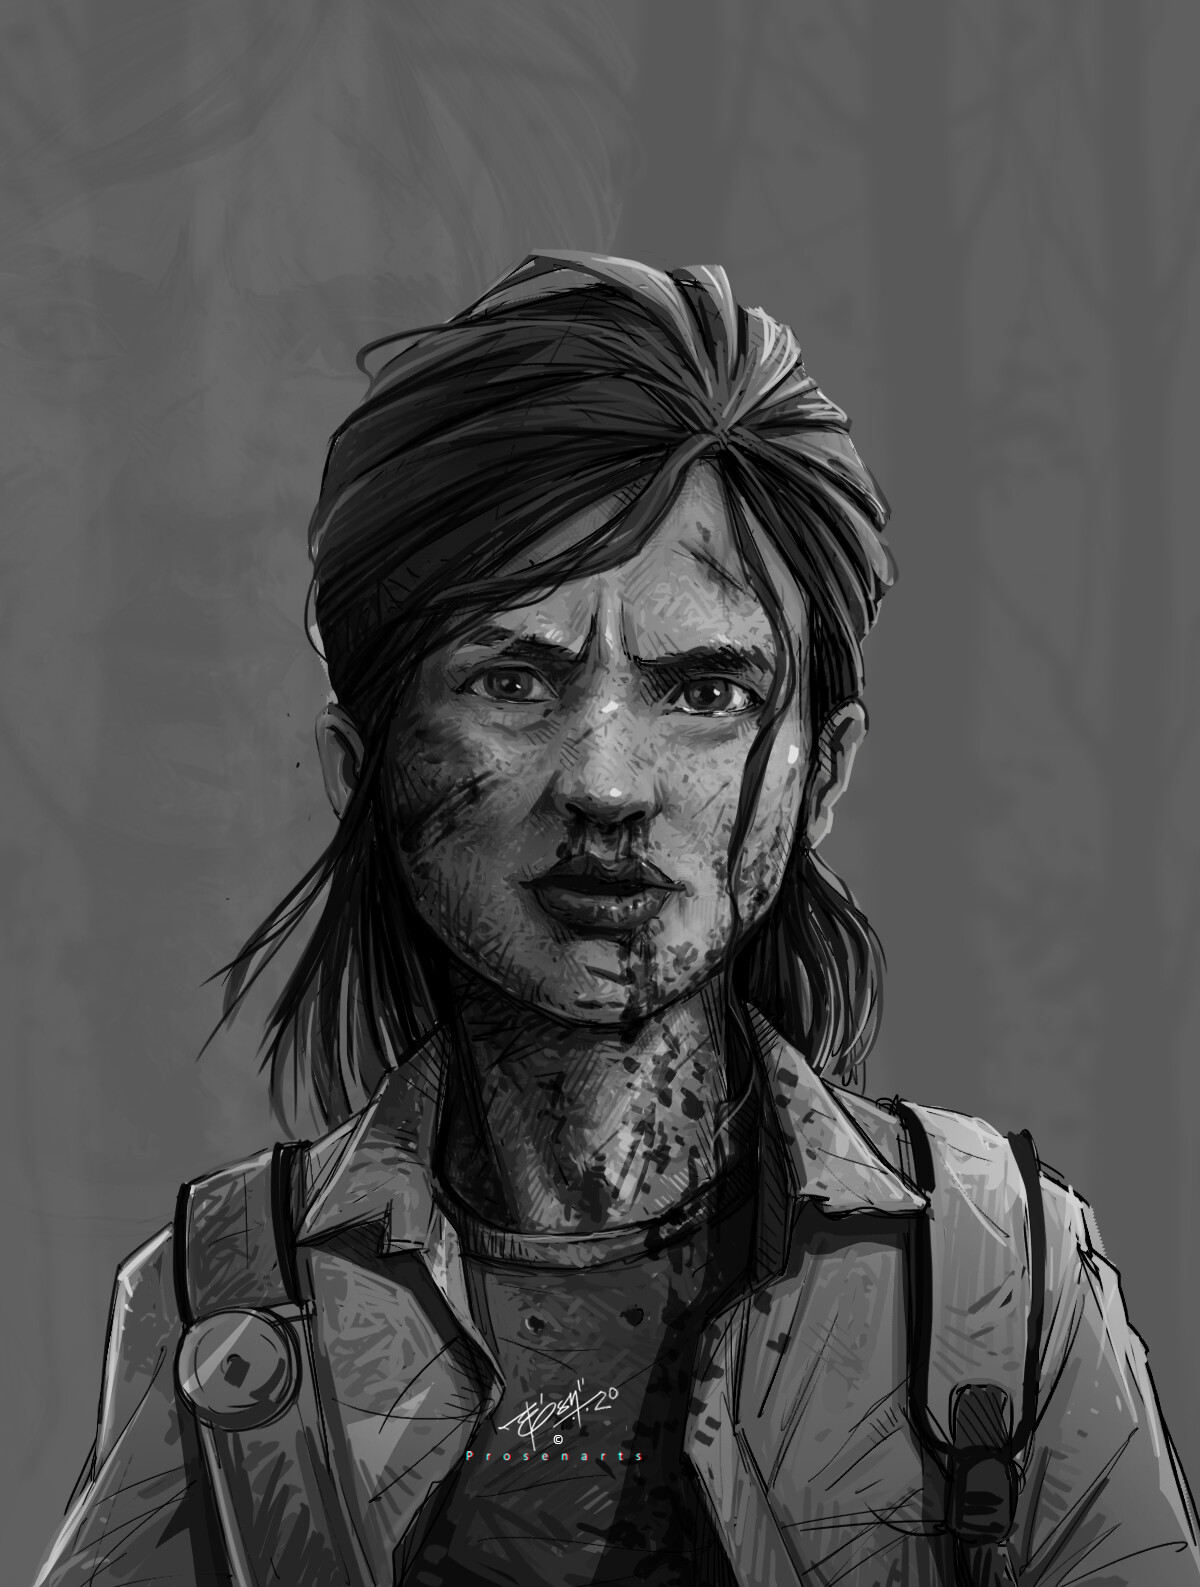 ArtStation - The Last of Us 2 - Ellie Hair - Unreal engine 5 with  Breakdowns - Fan Art